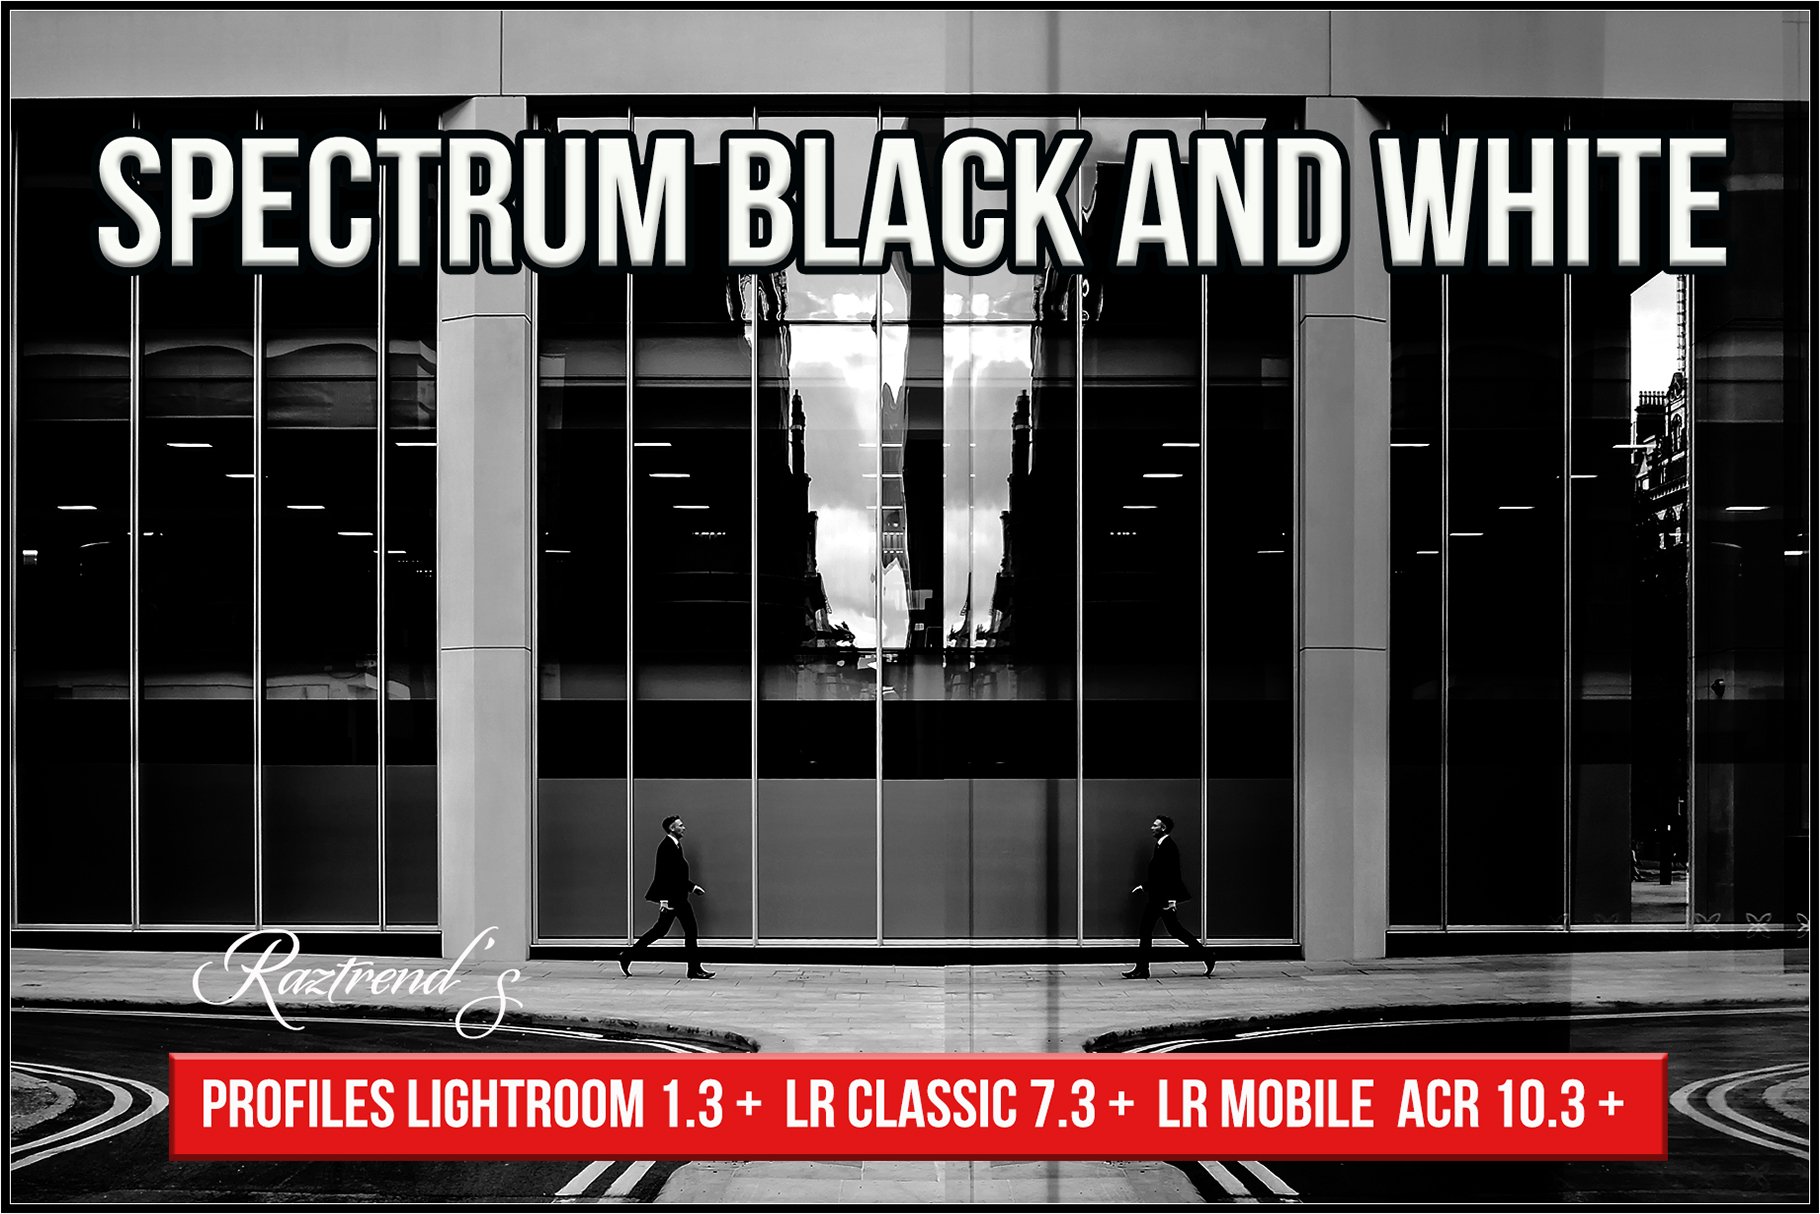 Spectrum Black and White profilescover image.